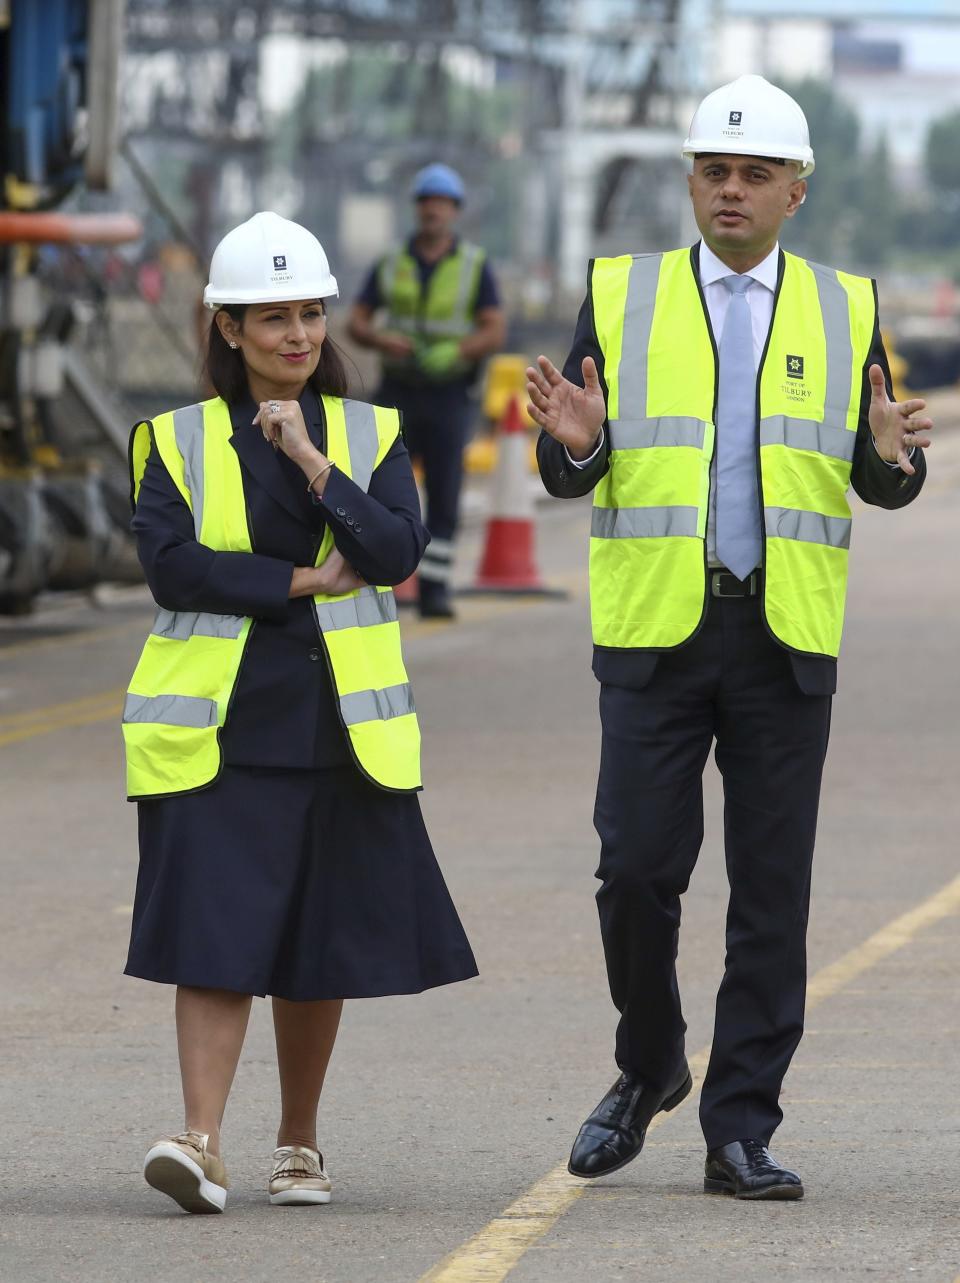 Britain's Chancellor of the Exchequer Sajid Javid, right, and Home Secretary Priti Patel visit Tlbury Docks, south east London, Thursday Aug. 1, 2019. (Alex Lentati/Pool via AP)